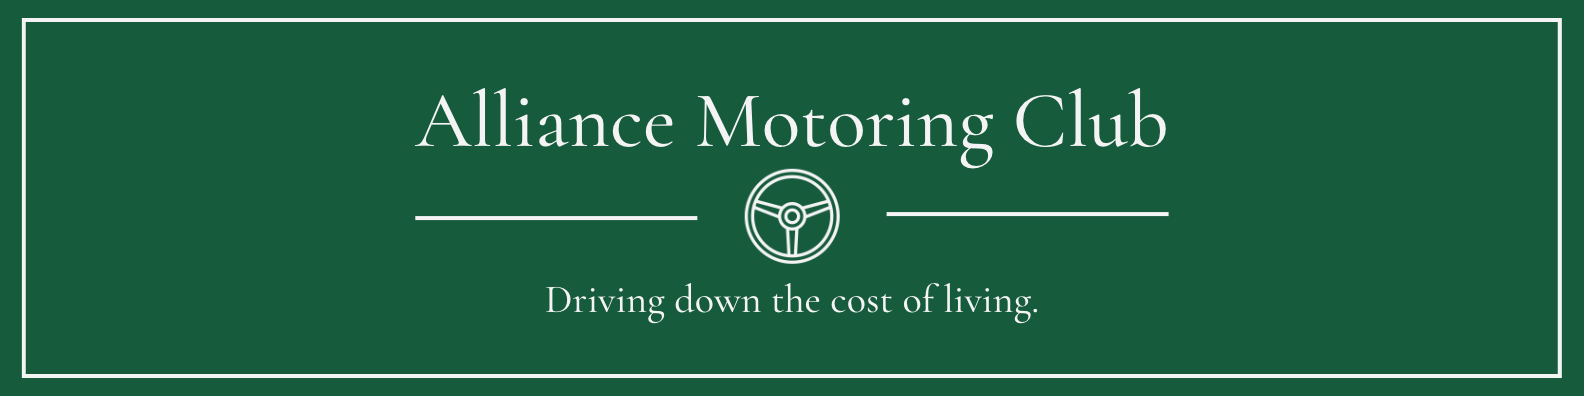 Alliance Motoring Club